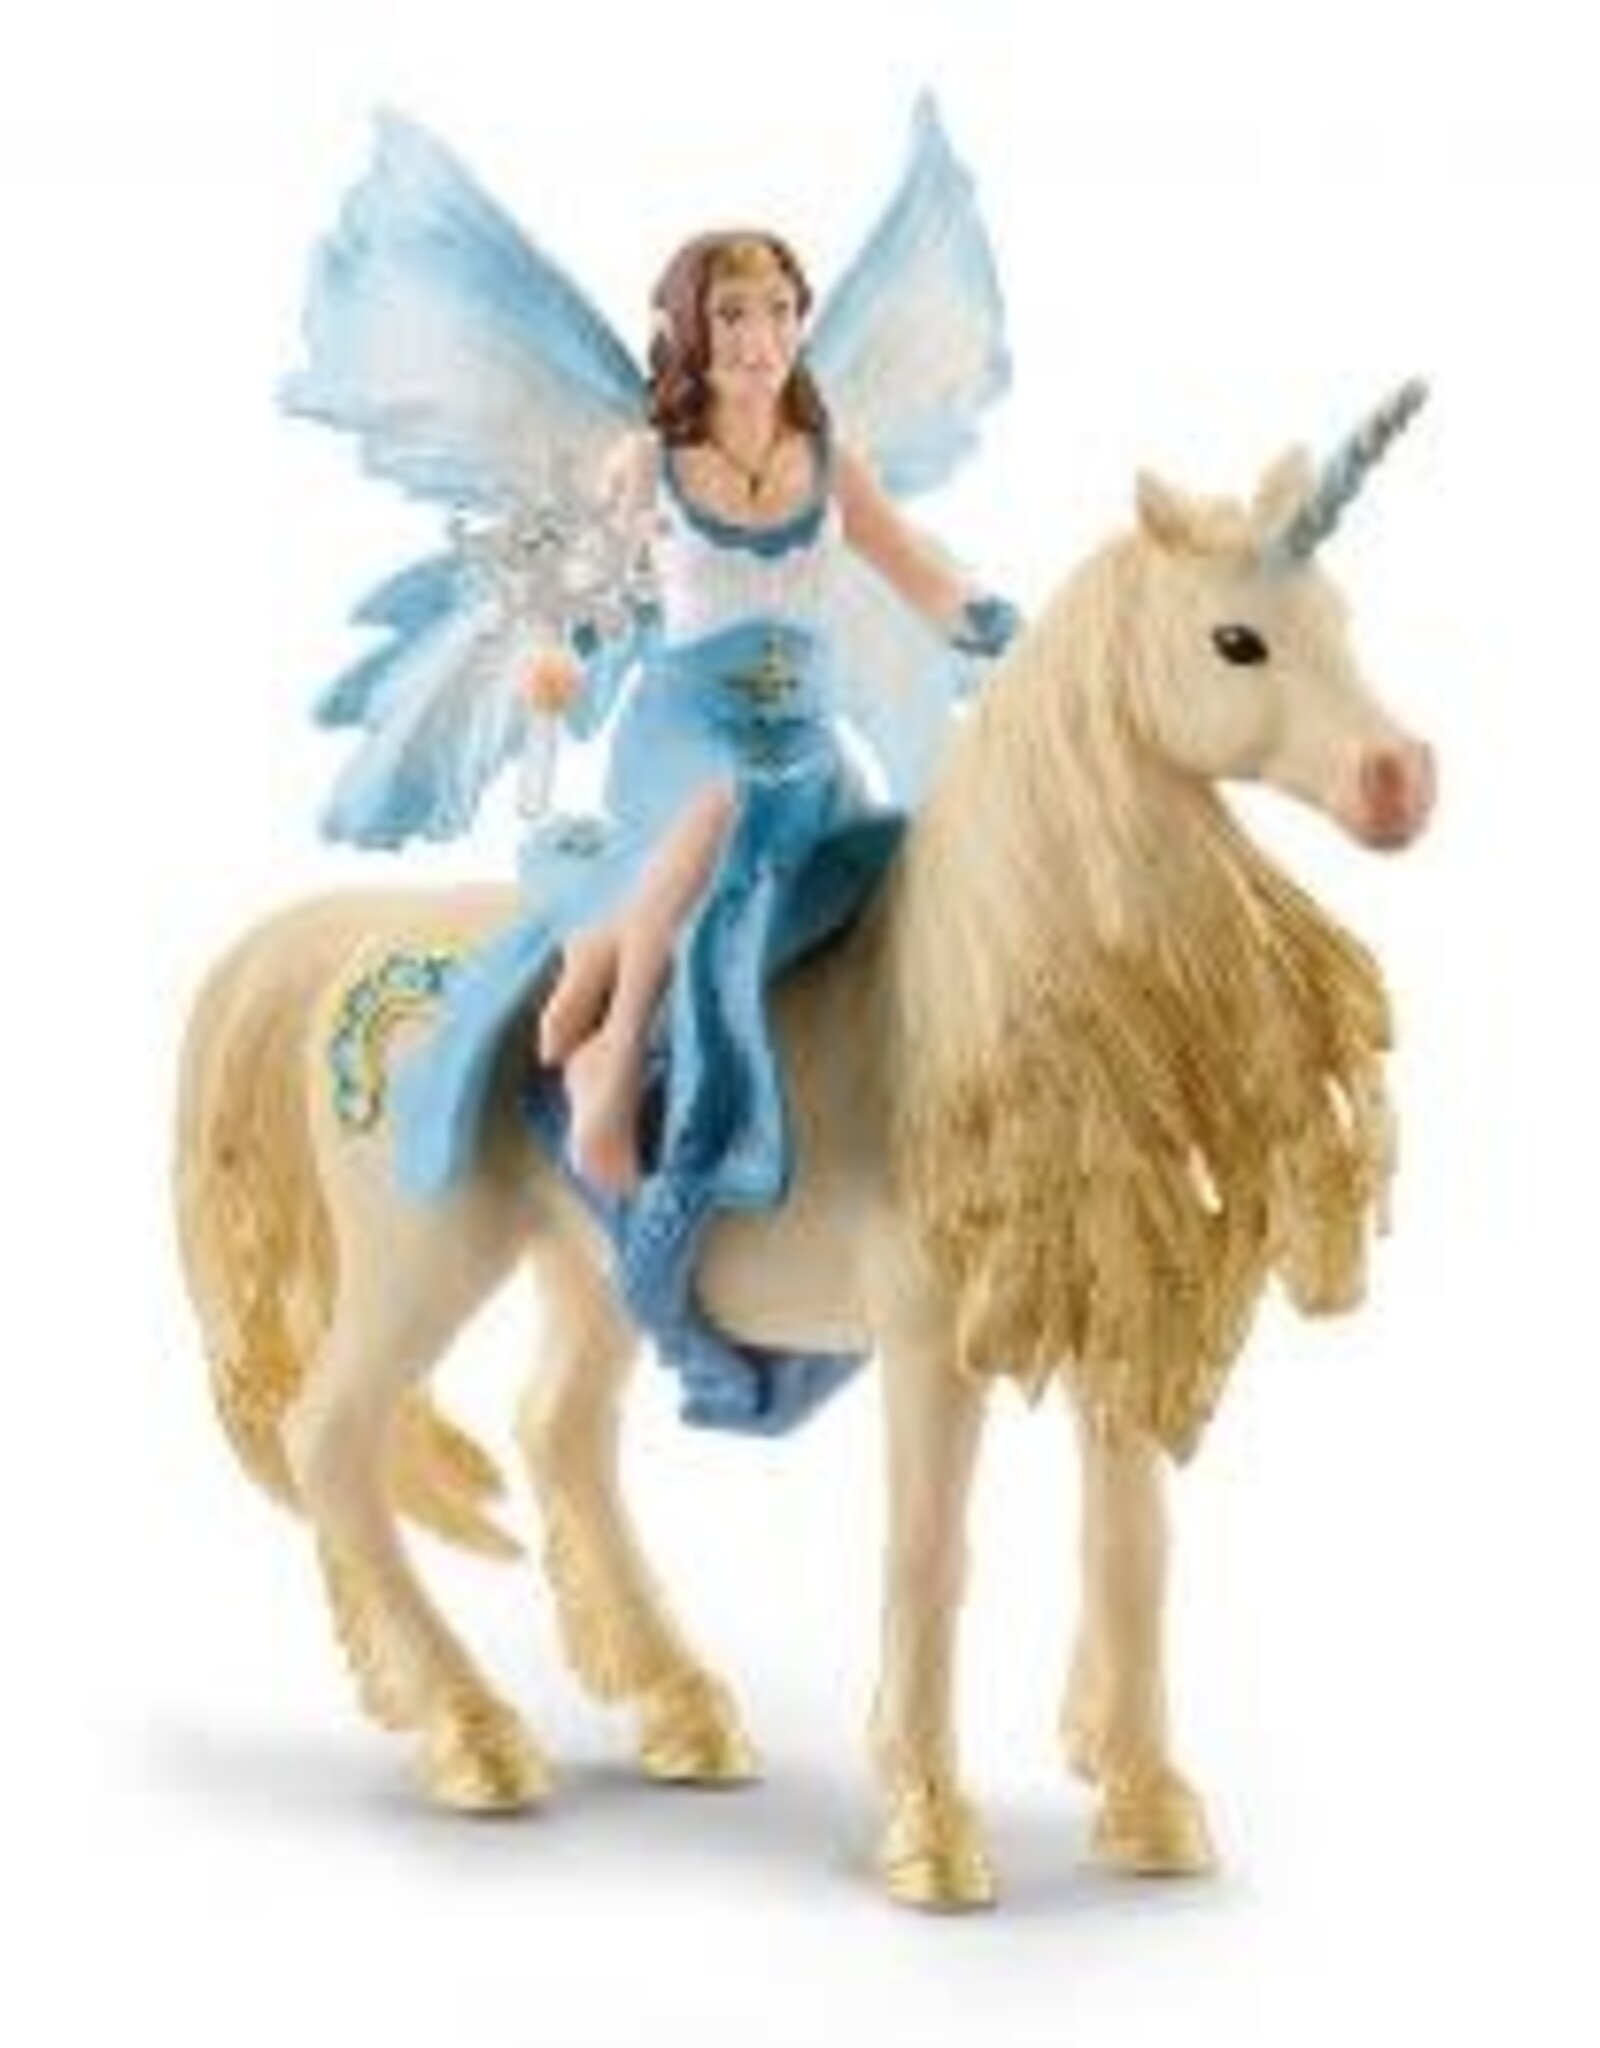 Schleich Eyela Riding Golden Unicorn